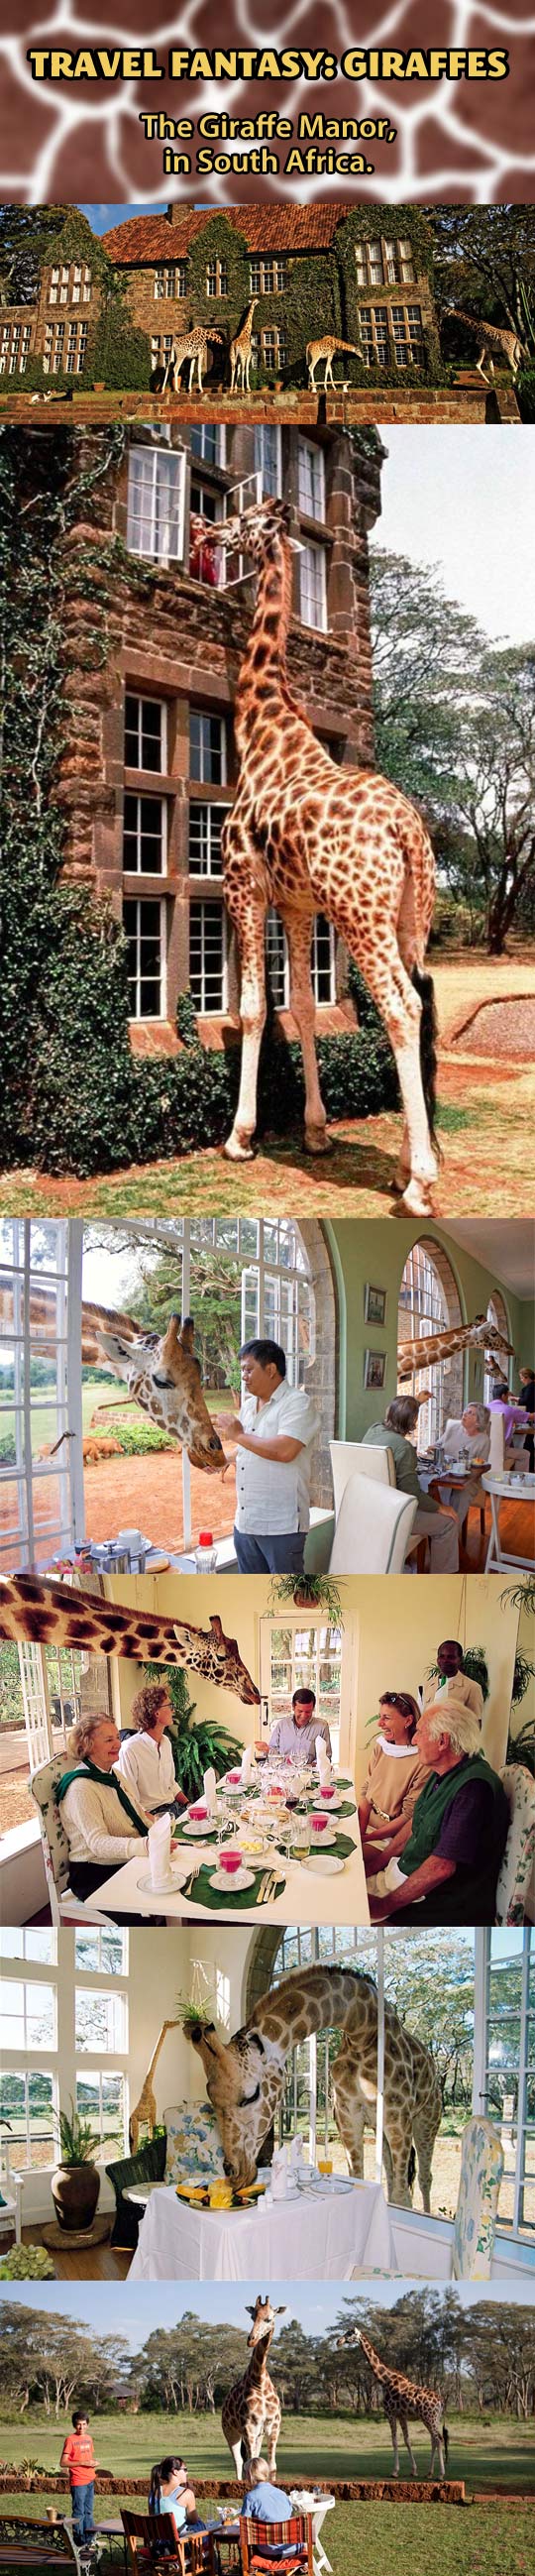 Giraffe Manor, South Africa.